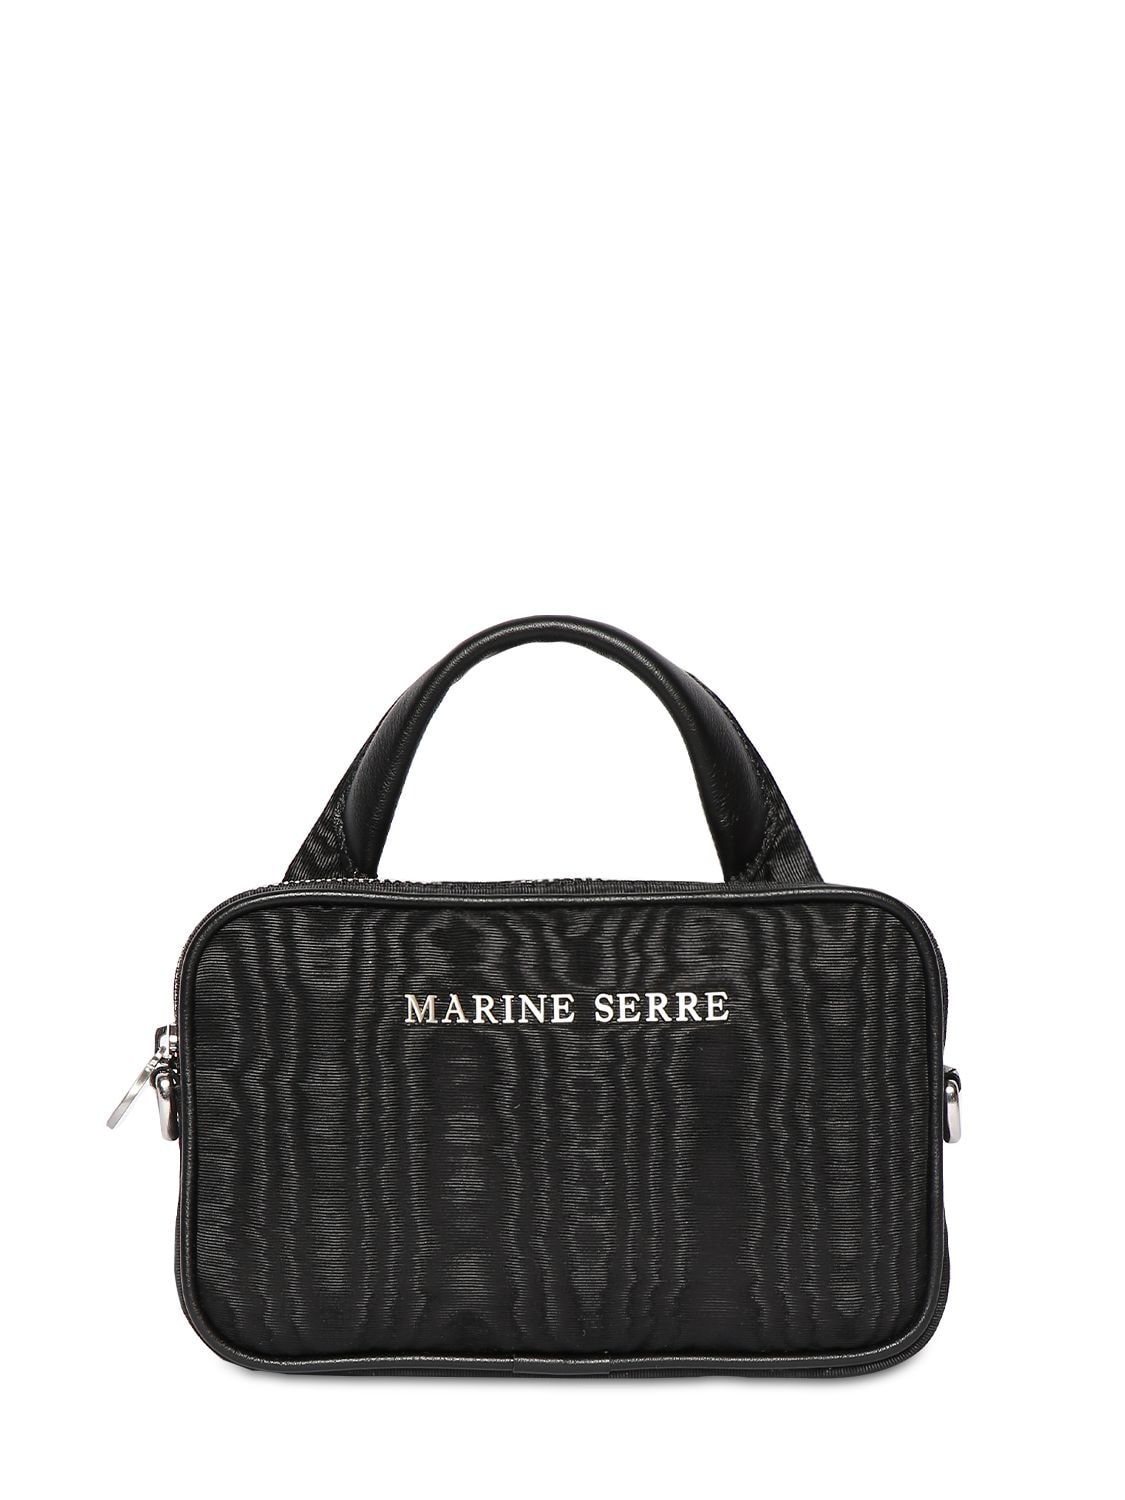 Marine Serre Mini Madame Moire Top Handle Bag In Black